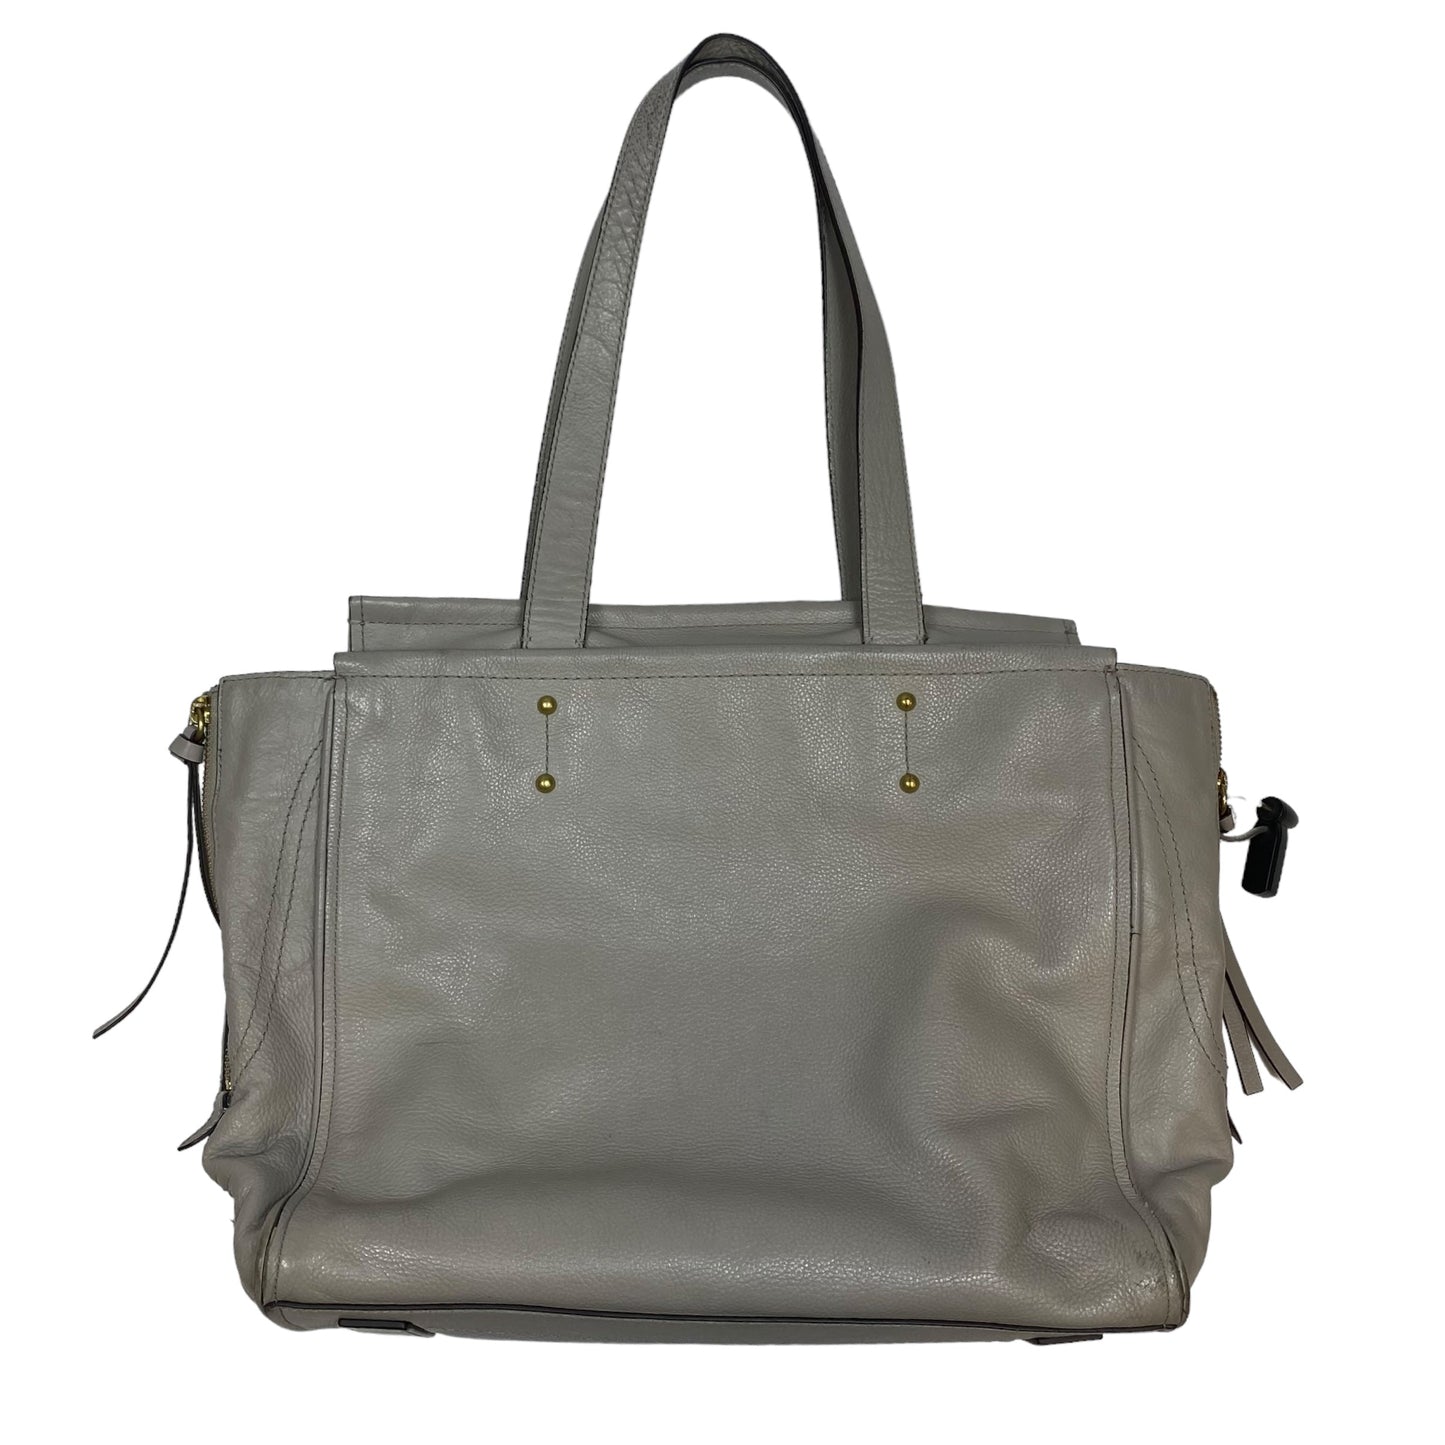 Handbag designer Cole-haan, Size Medium